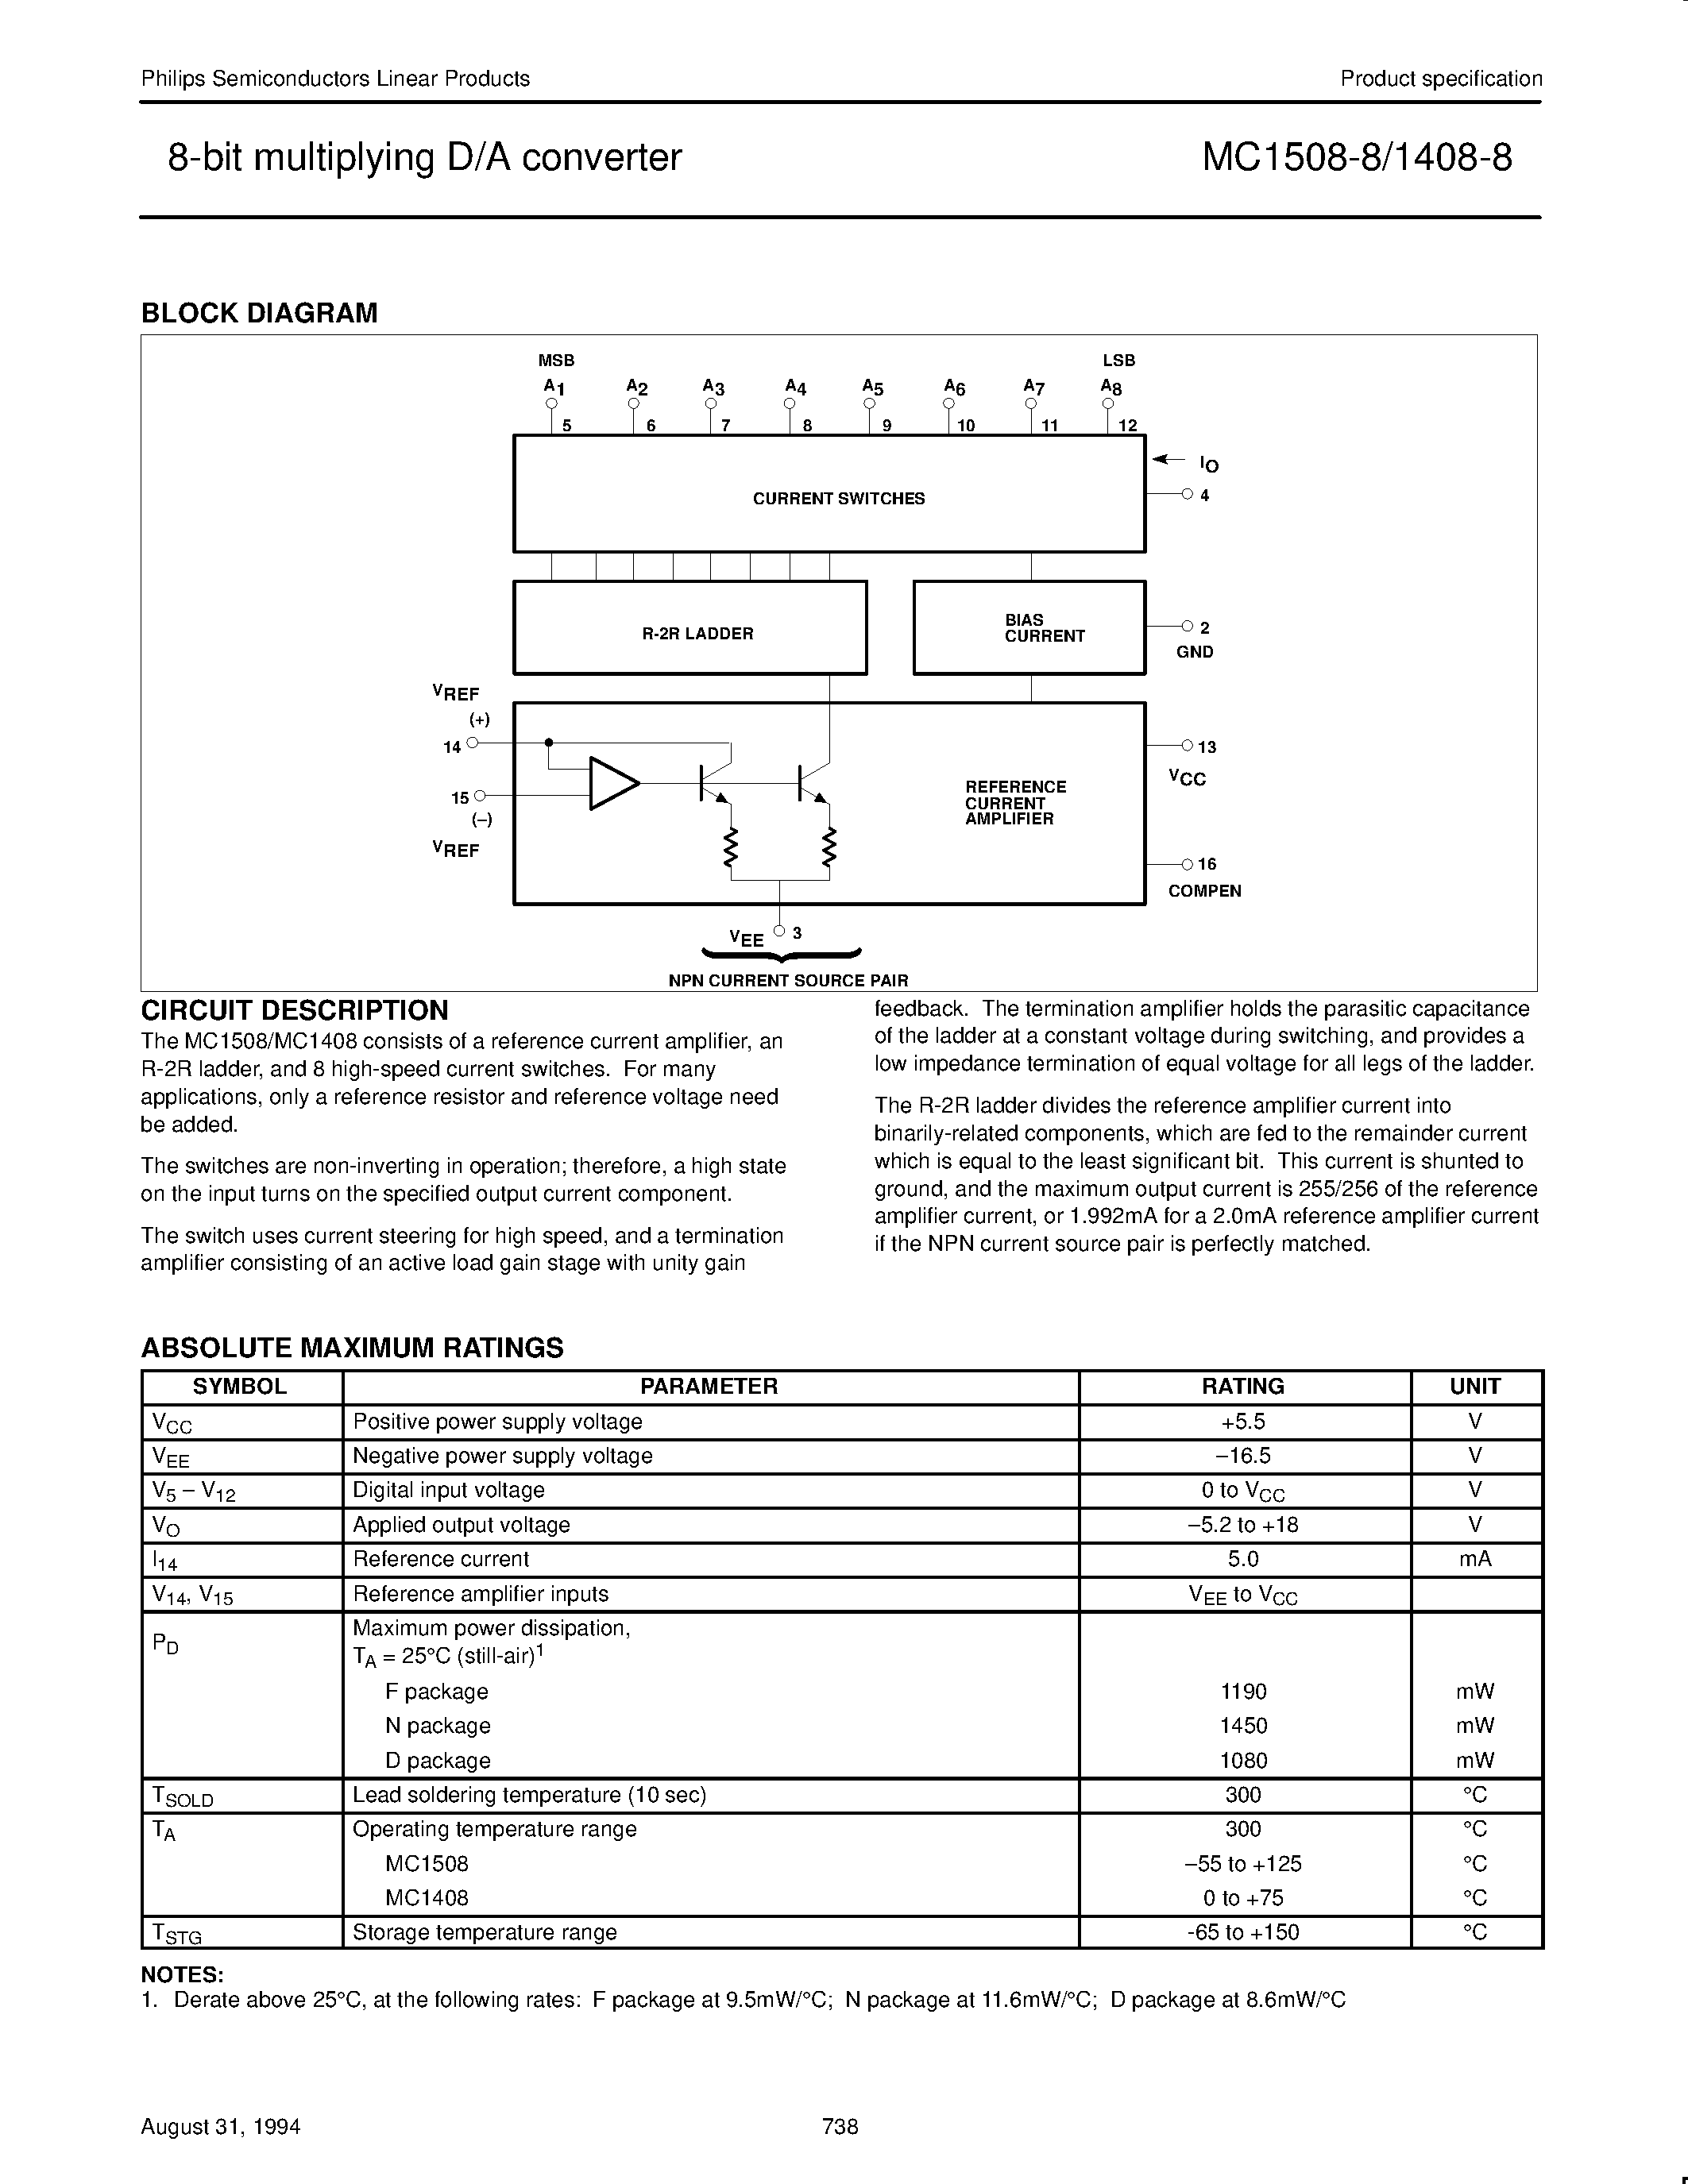 Datasheet MC1408-8 - (MC1508-8 / MC1408-8) 8-Bit Multiplying D/A Converter page 2